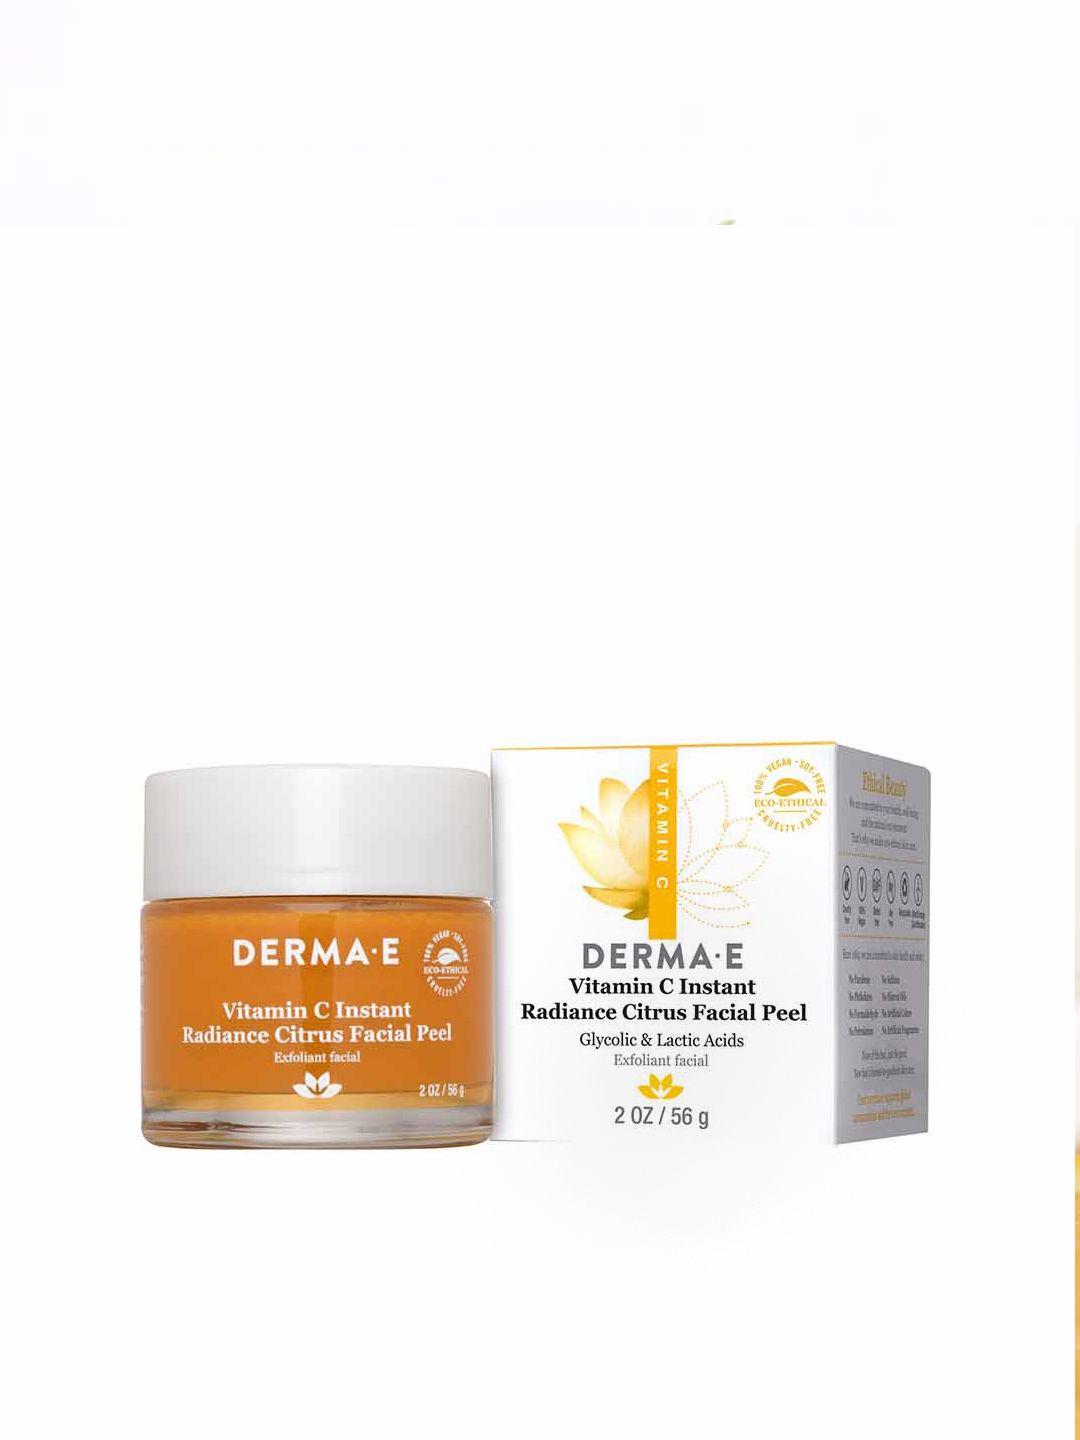 derma e vitamin c instant radiance citrus facial peel with glycolic & lactic acid - 56 g